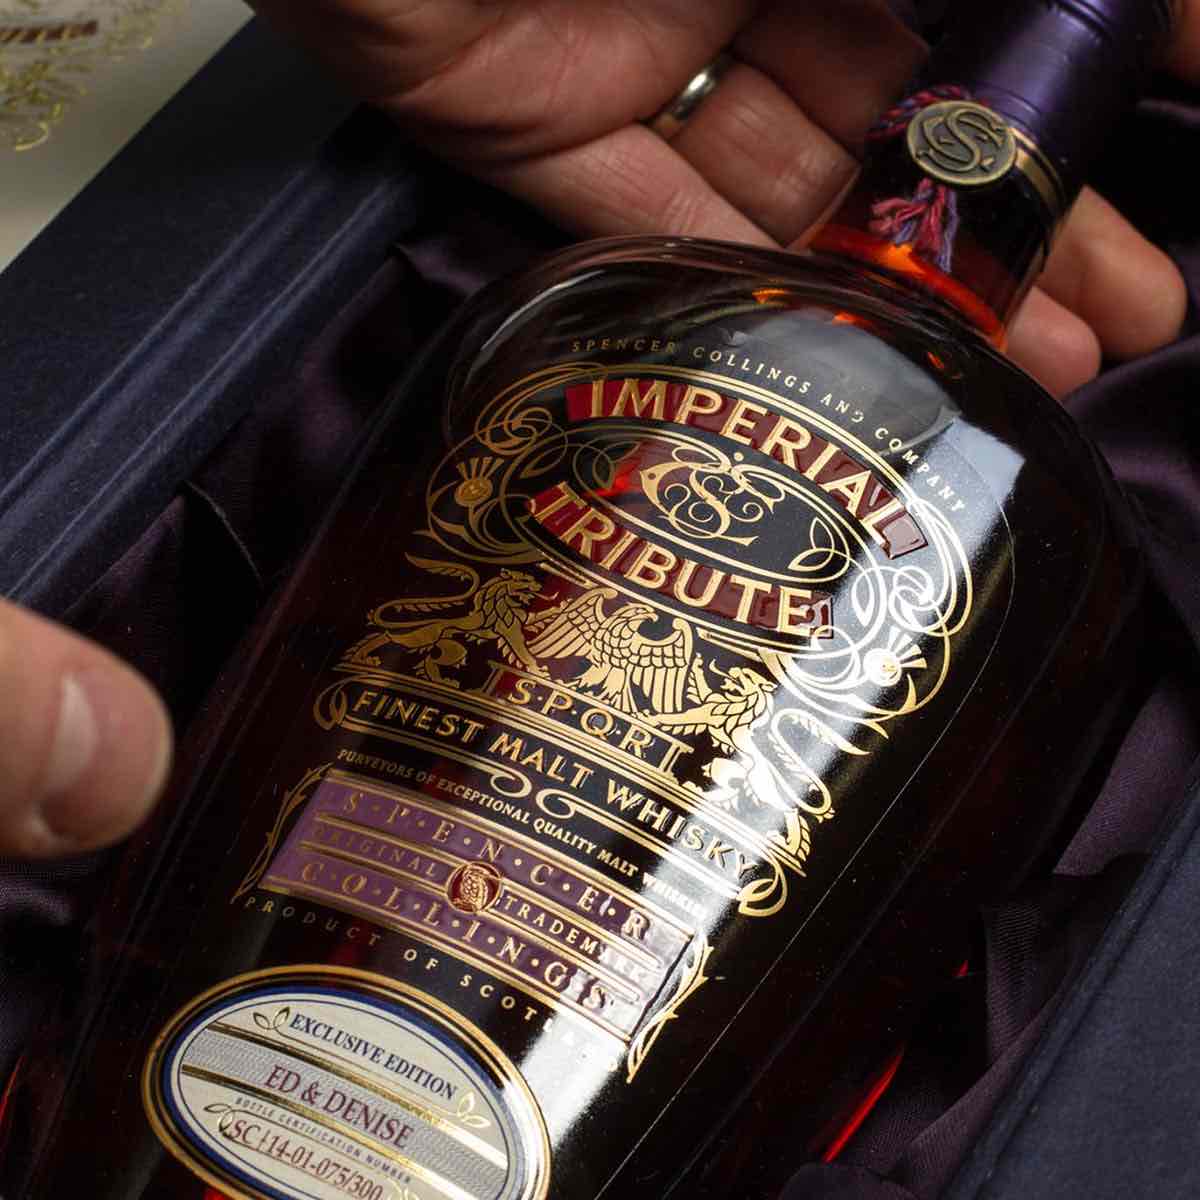 Imperial Tribute, a luxury malt scotch whisky